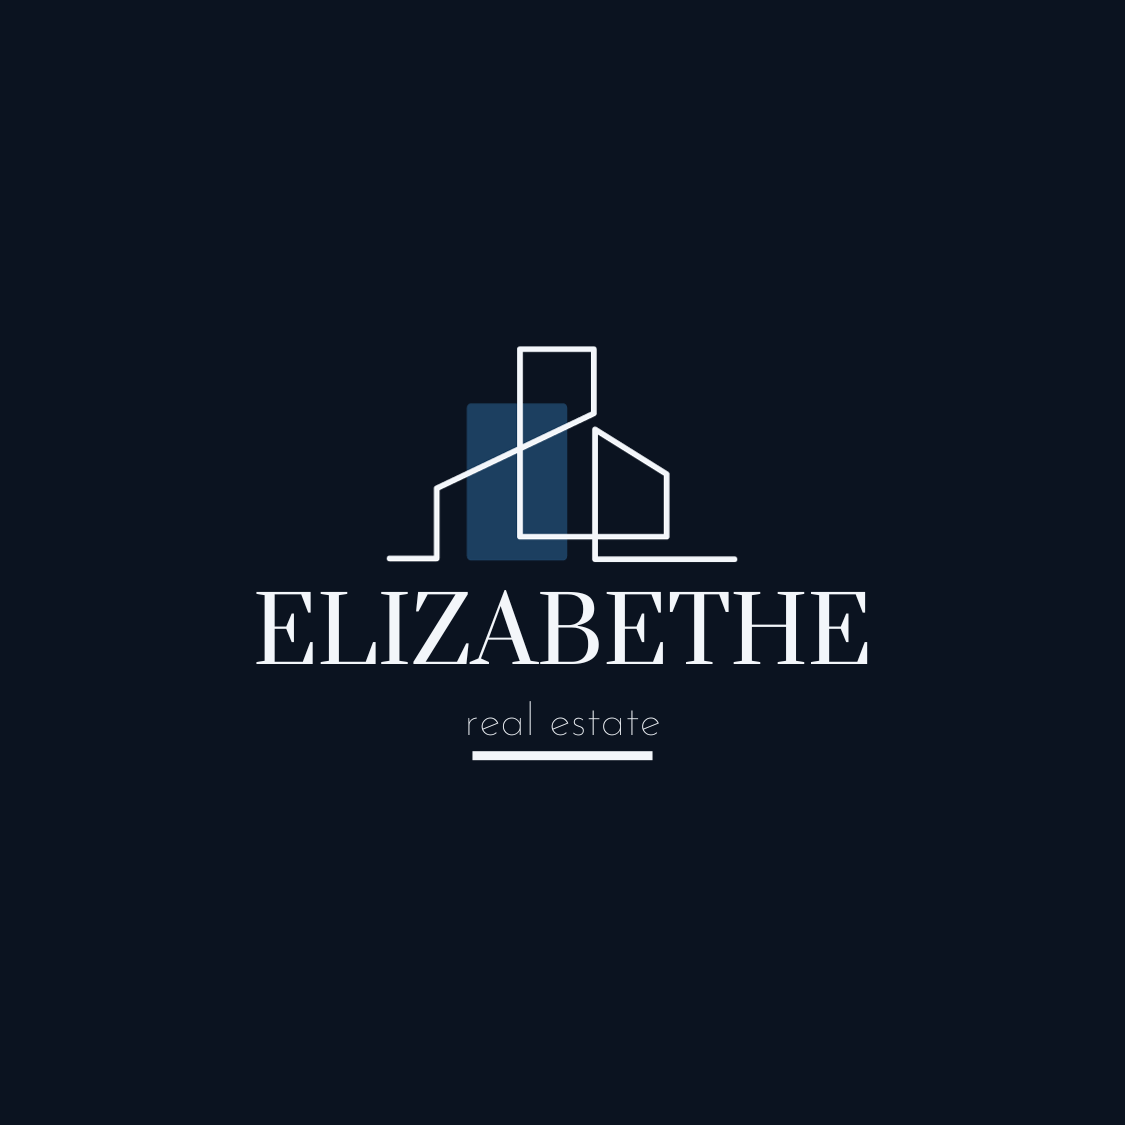 Simplistic Real Estate Logo preview image.